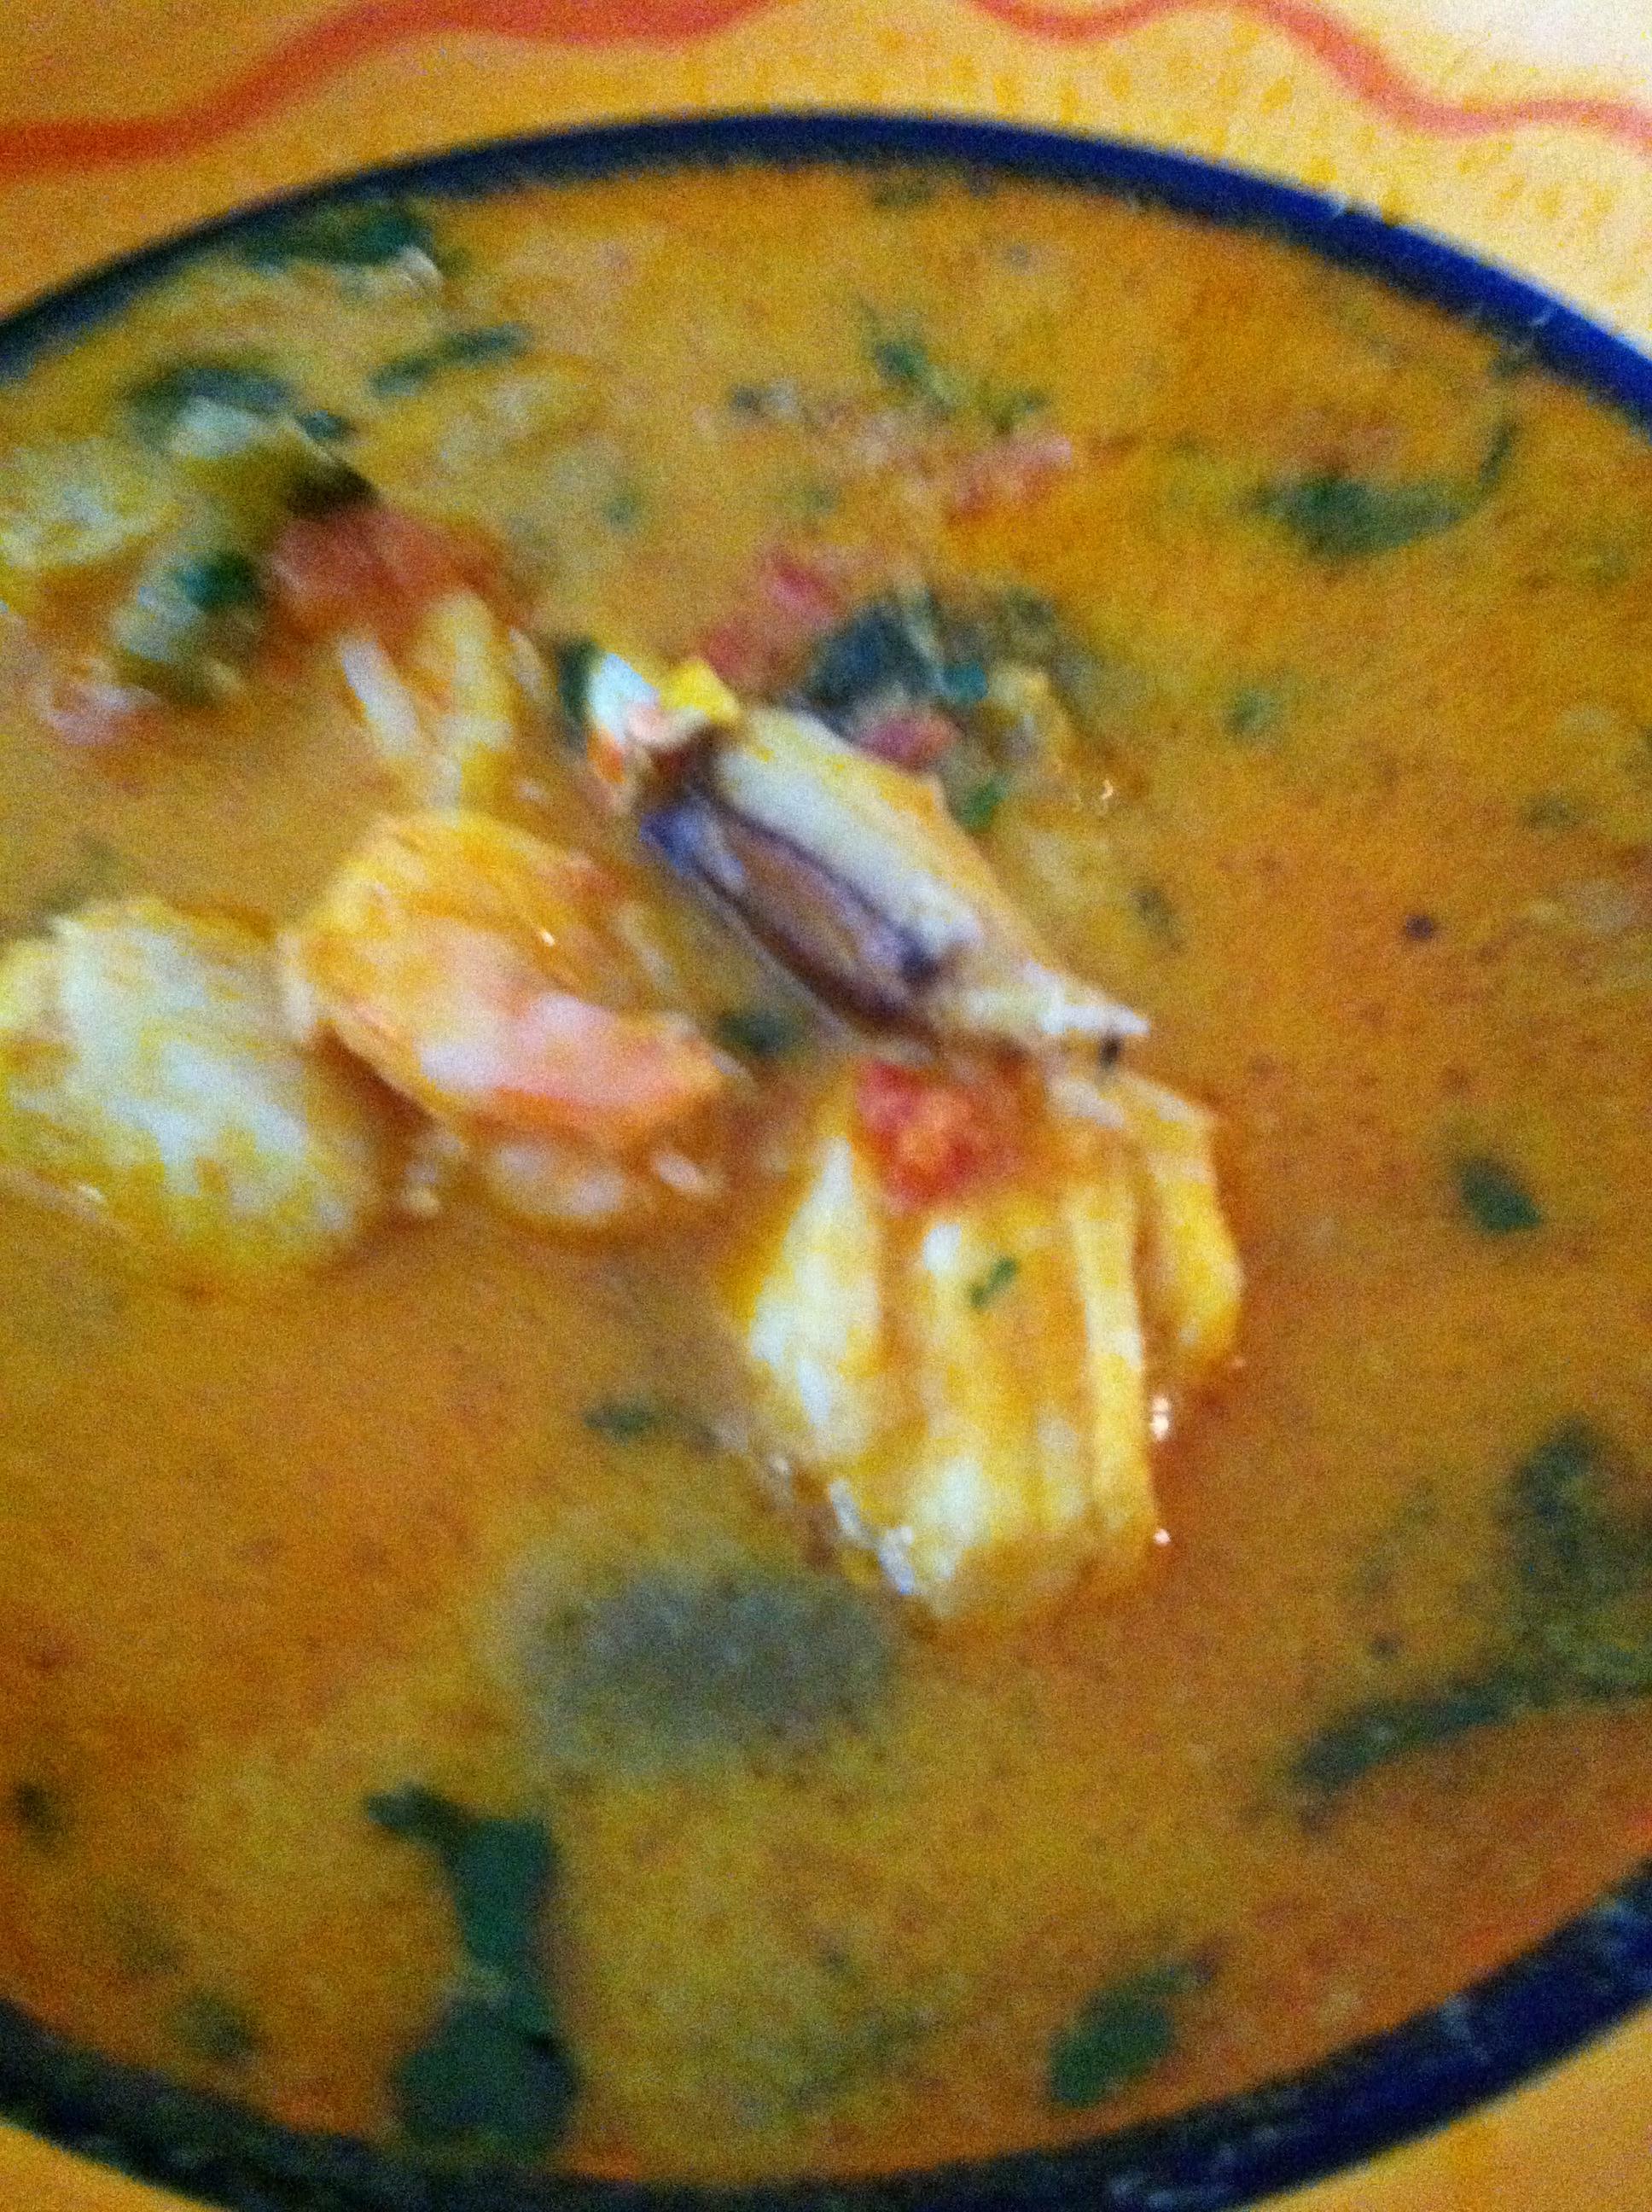 Moqueca Brazil fish stew